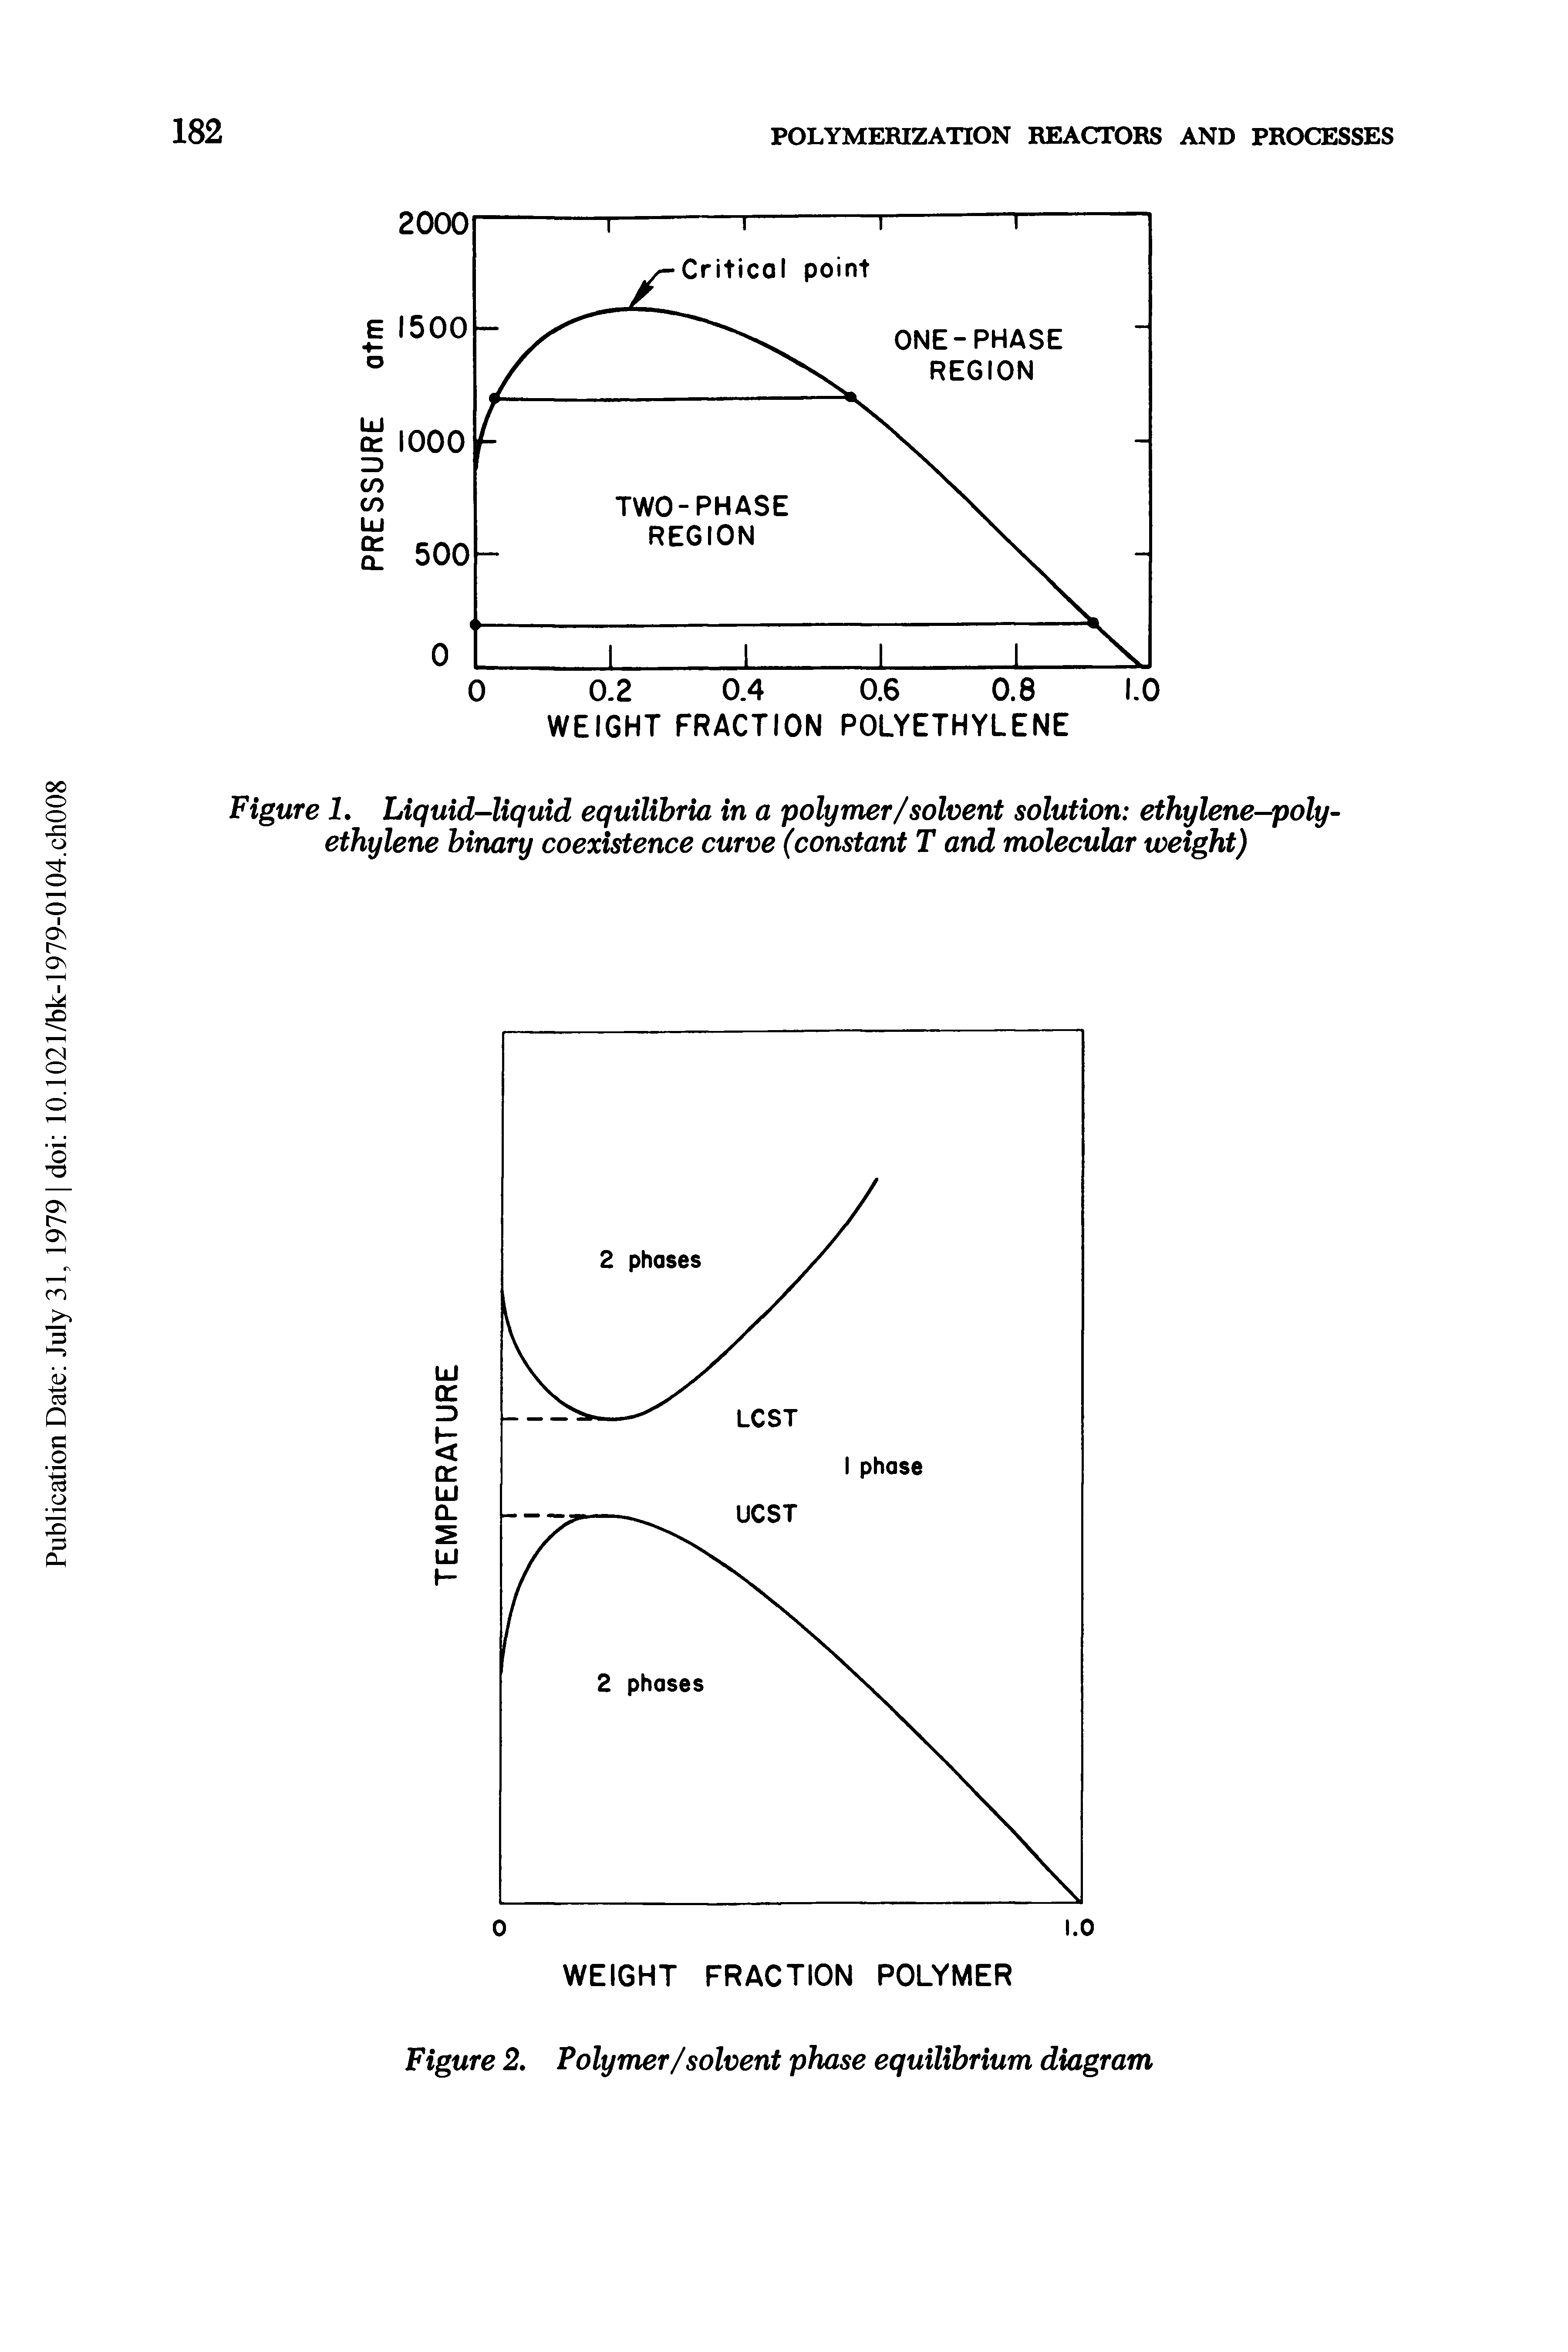 Figure 2, Polymer/solvent phase equilibrium diagram...